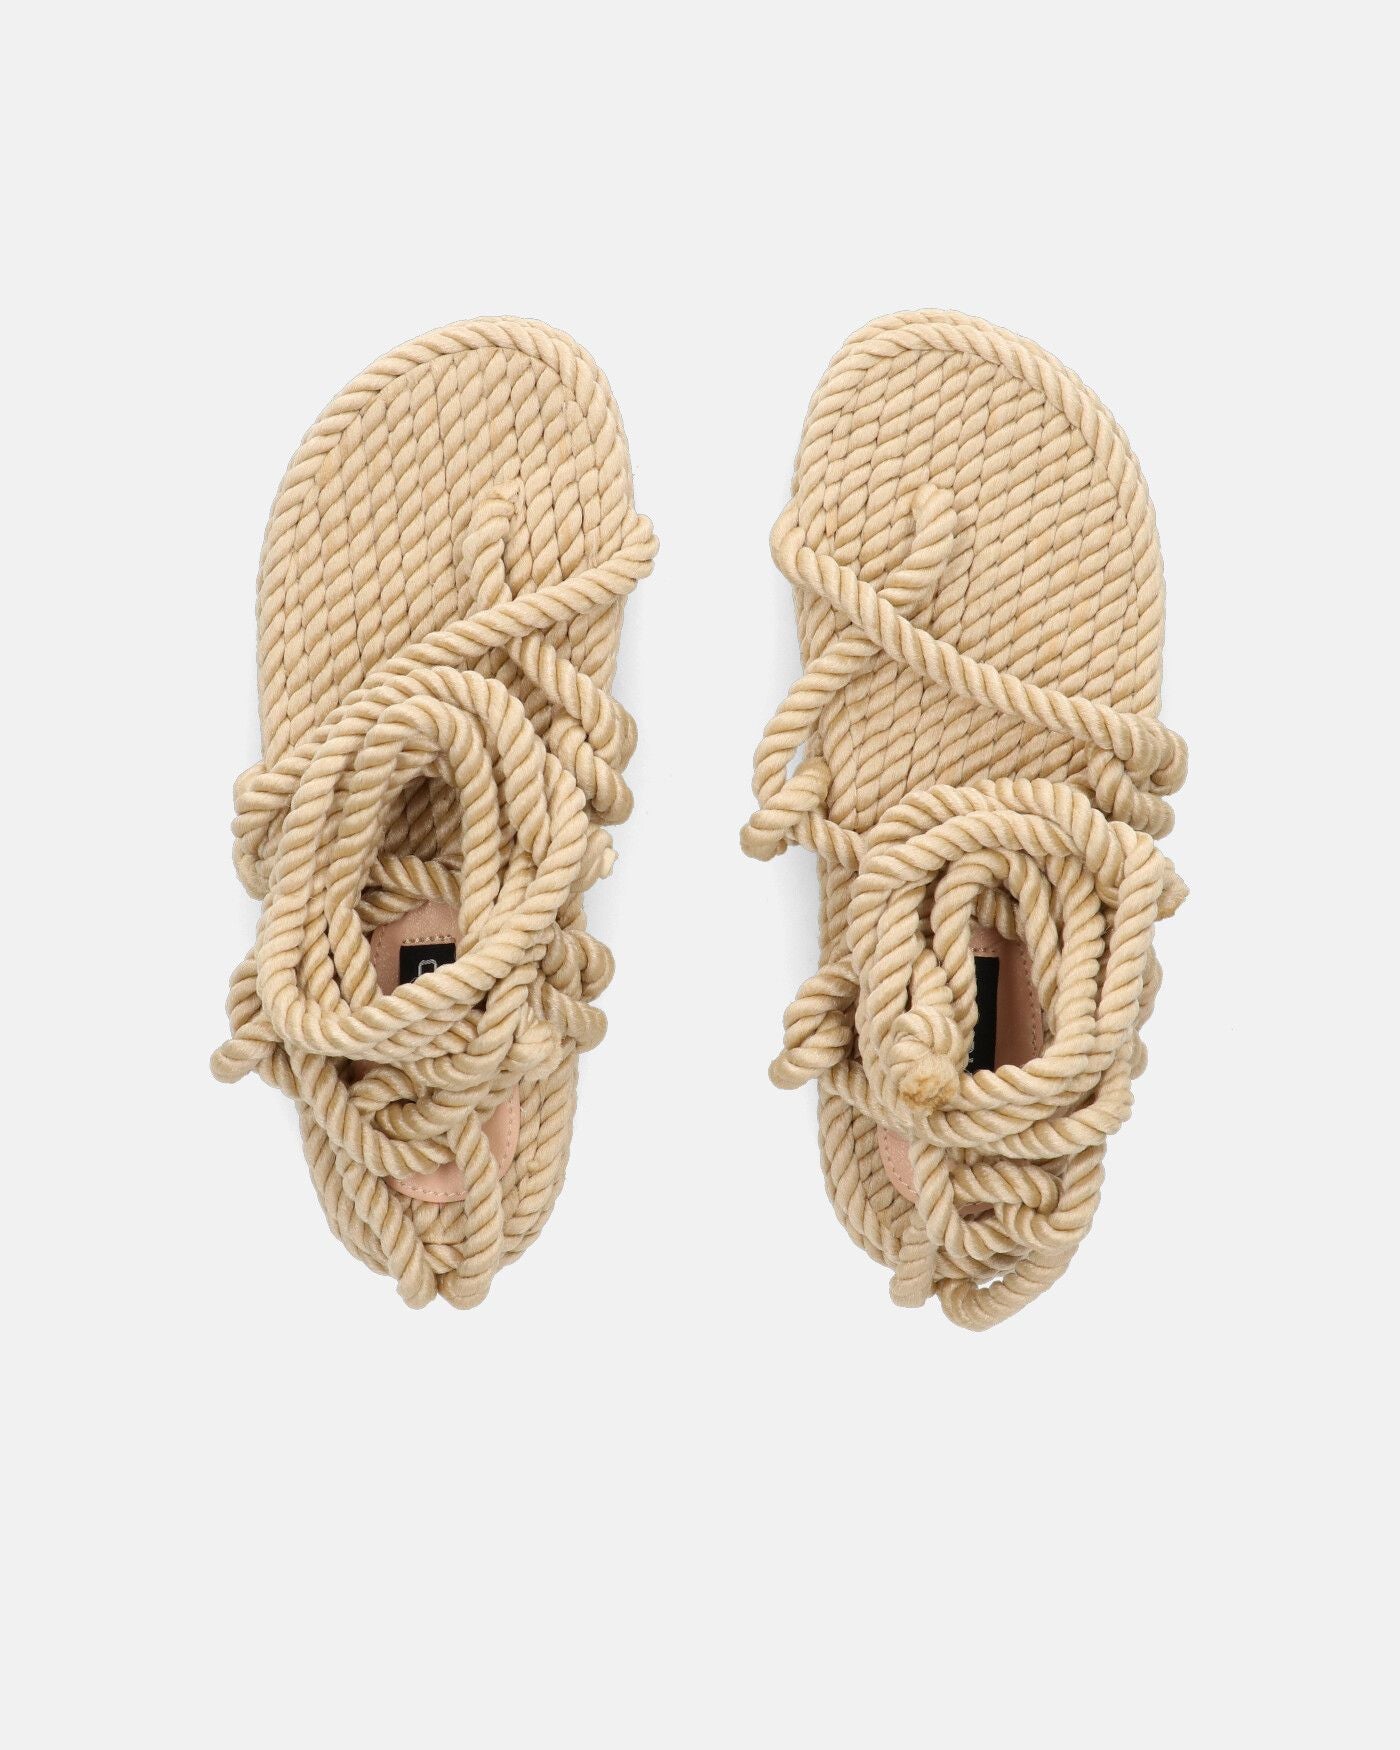 IRYNA - sandales basses beige en corde tressée